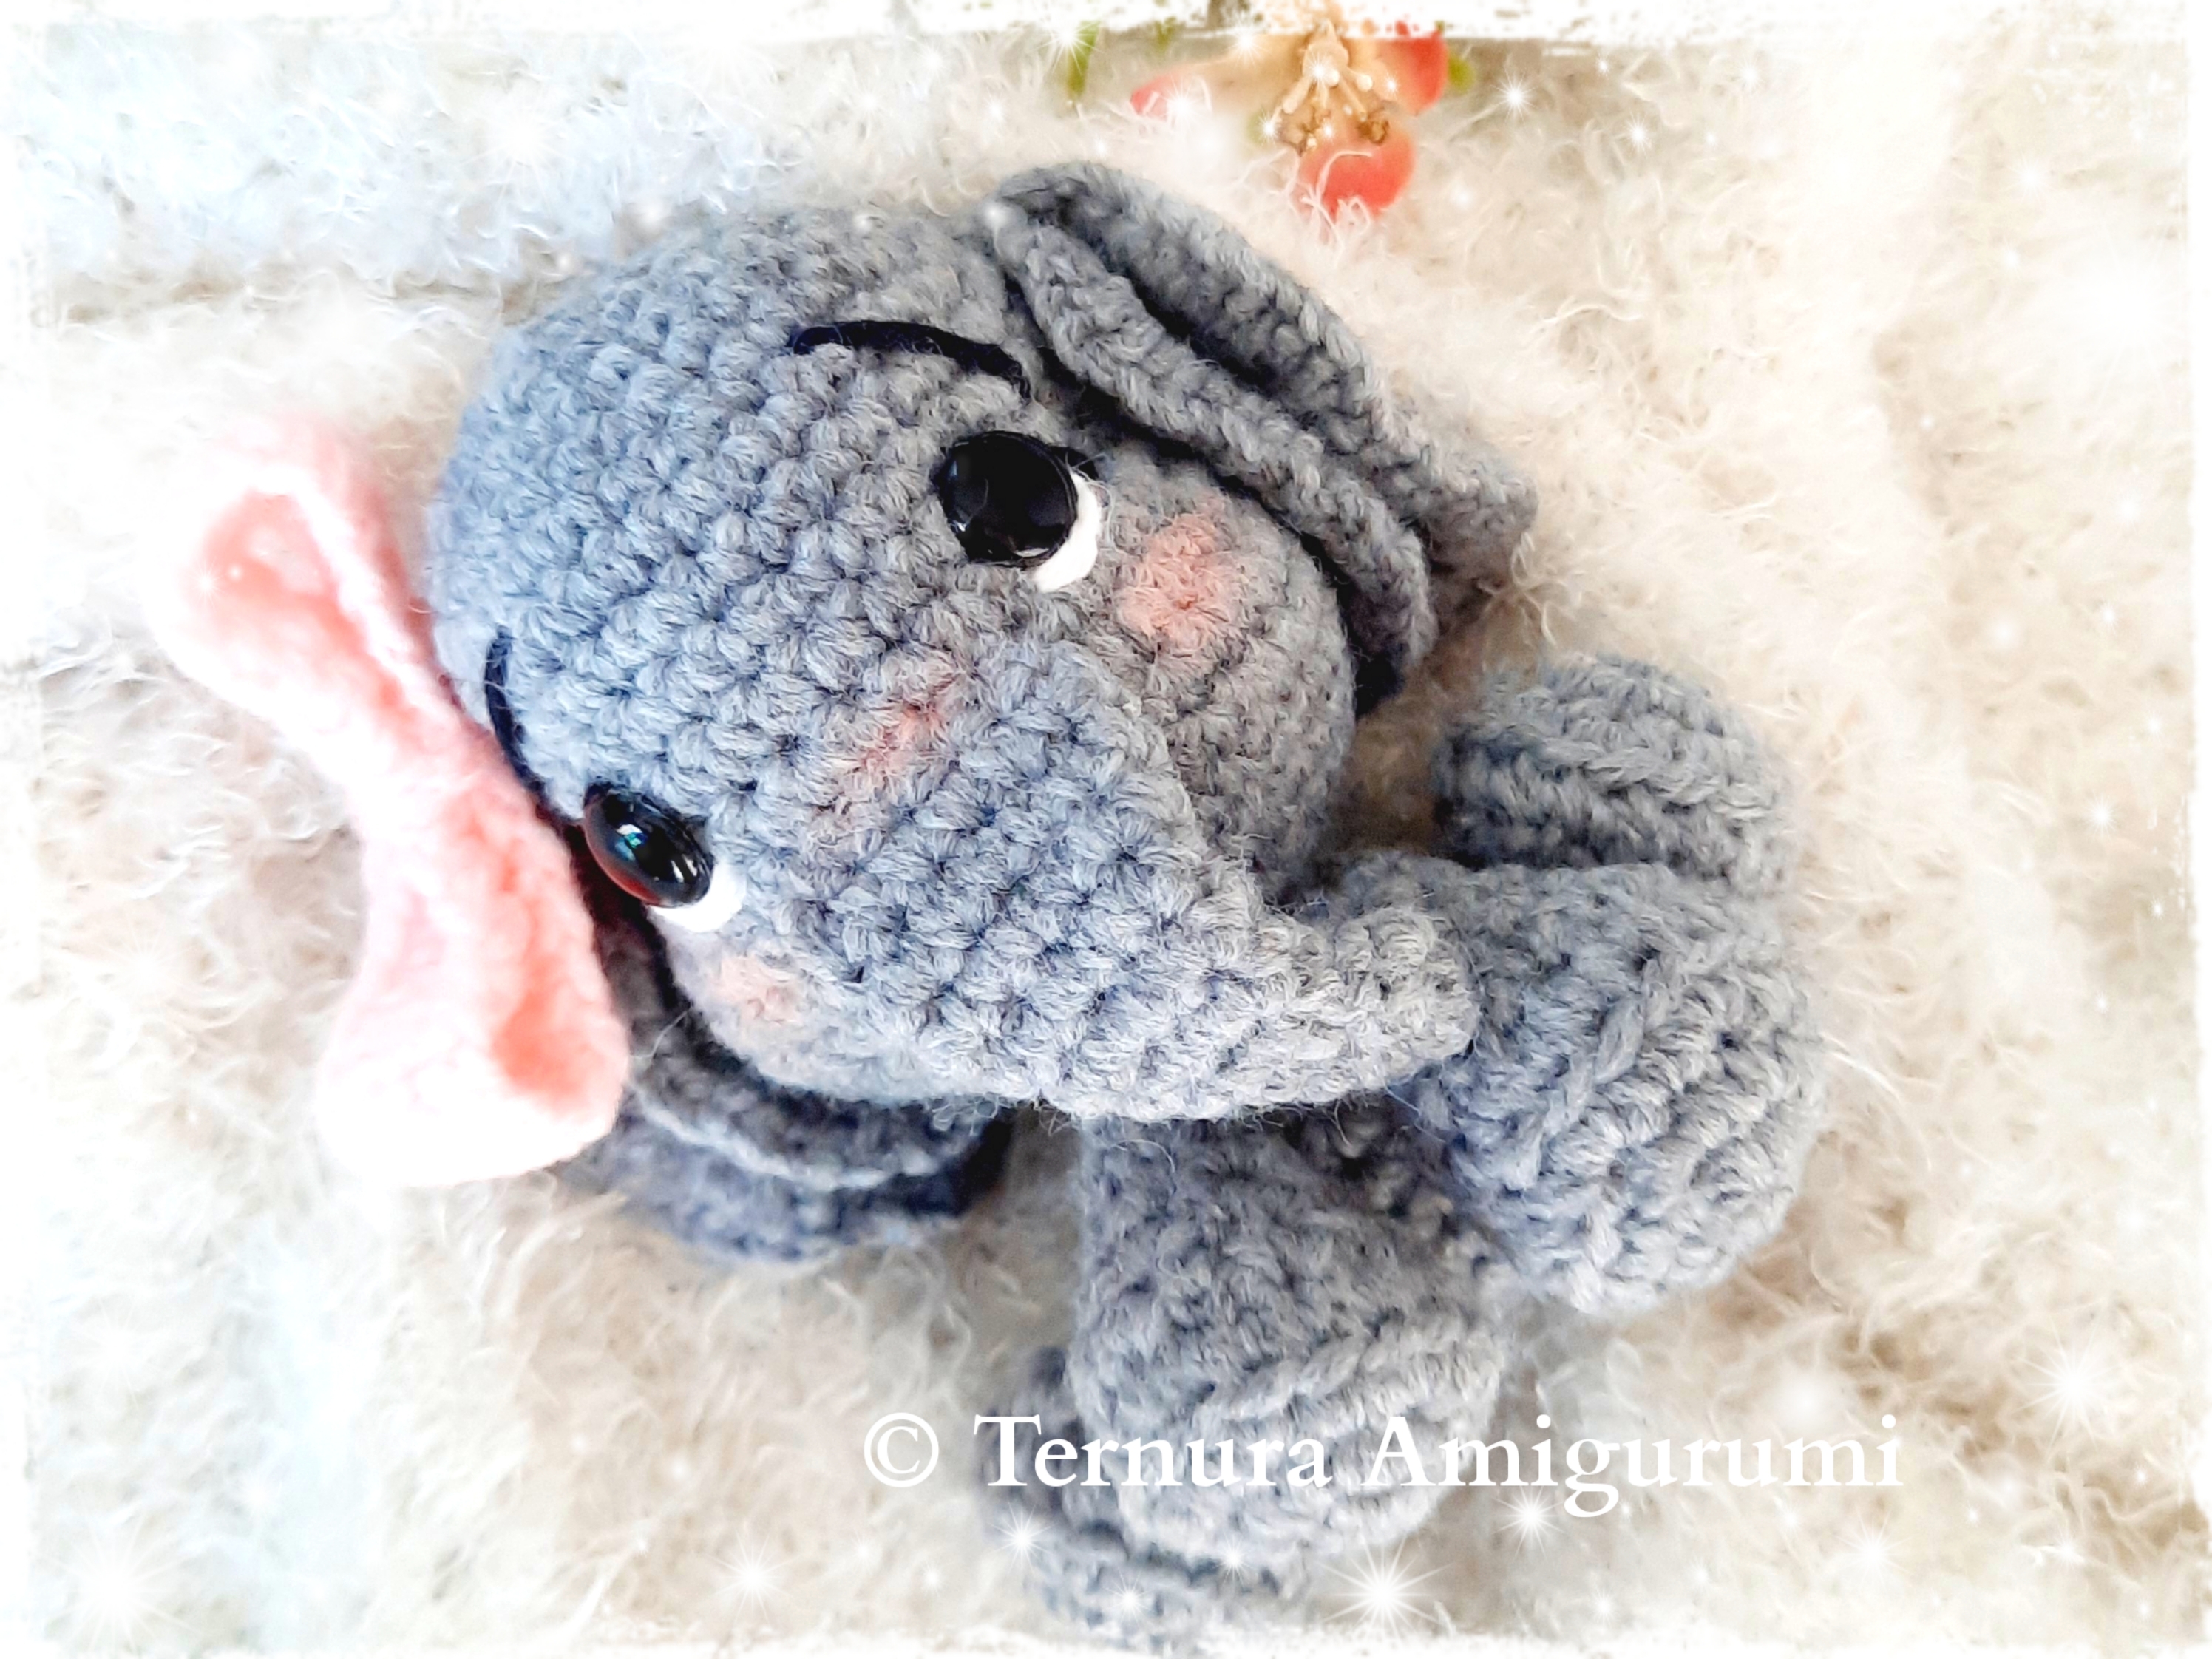 Elephant Stuffed Animal Doll Sewing Pattern / Soft Toy Digital PDF Download  -  Denmark